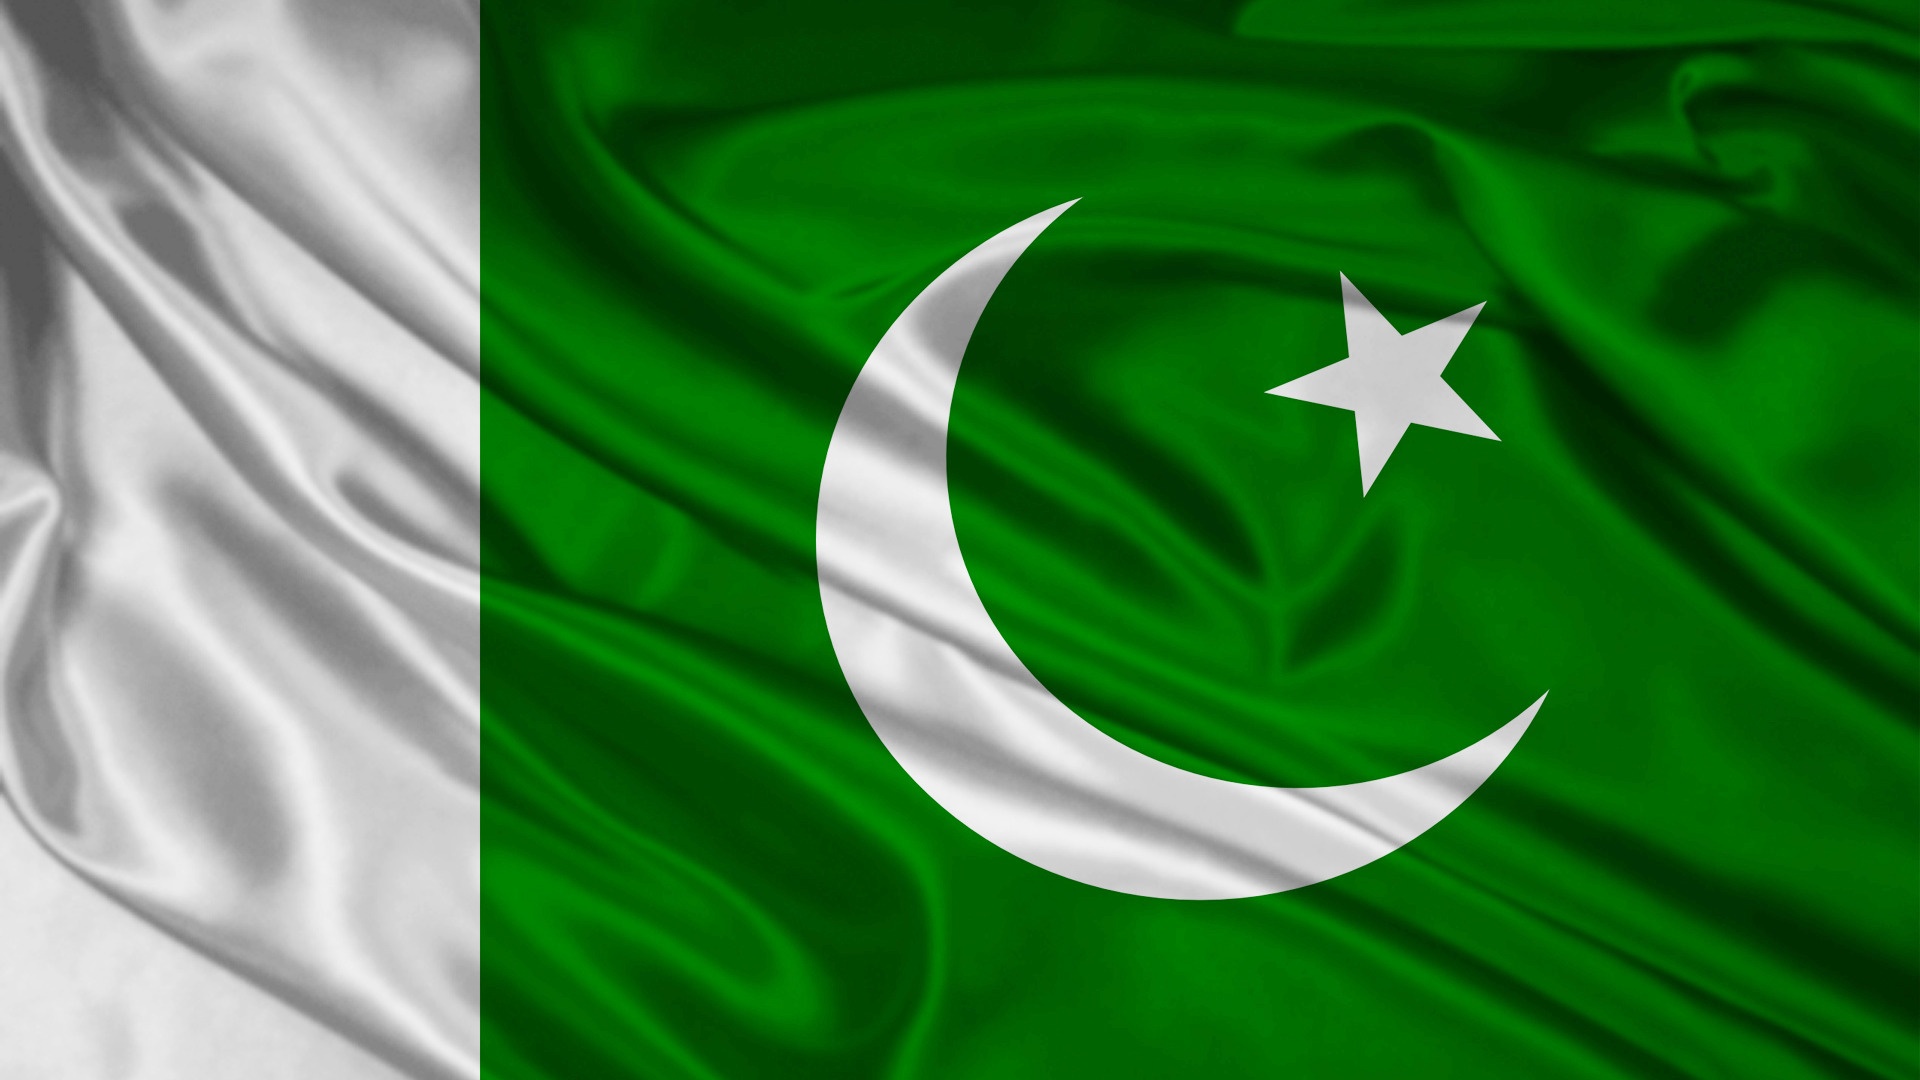 pakistan flag wallpaper,flag,green,symbol,textile,jersey